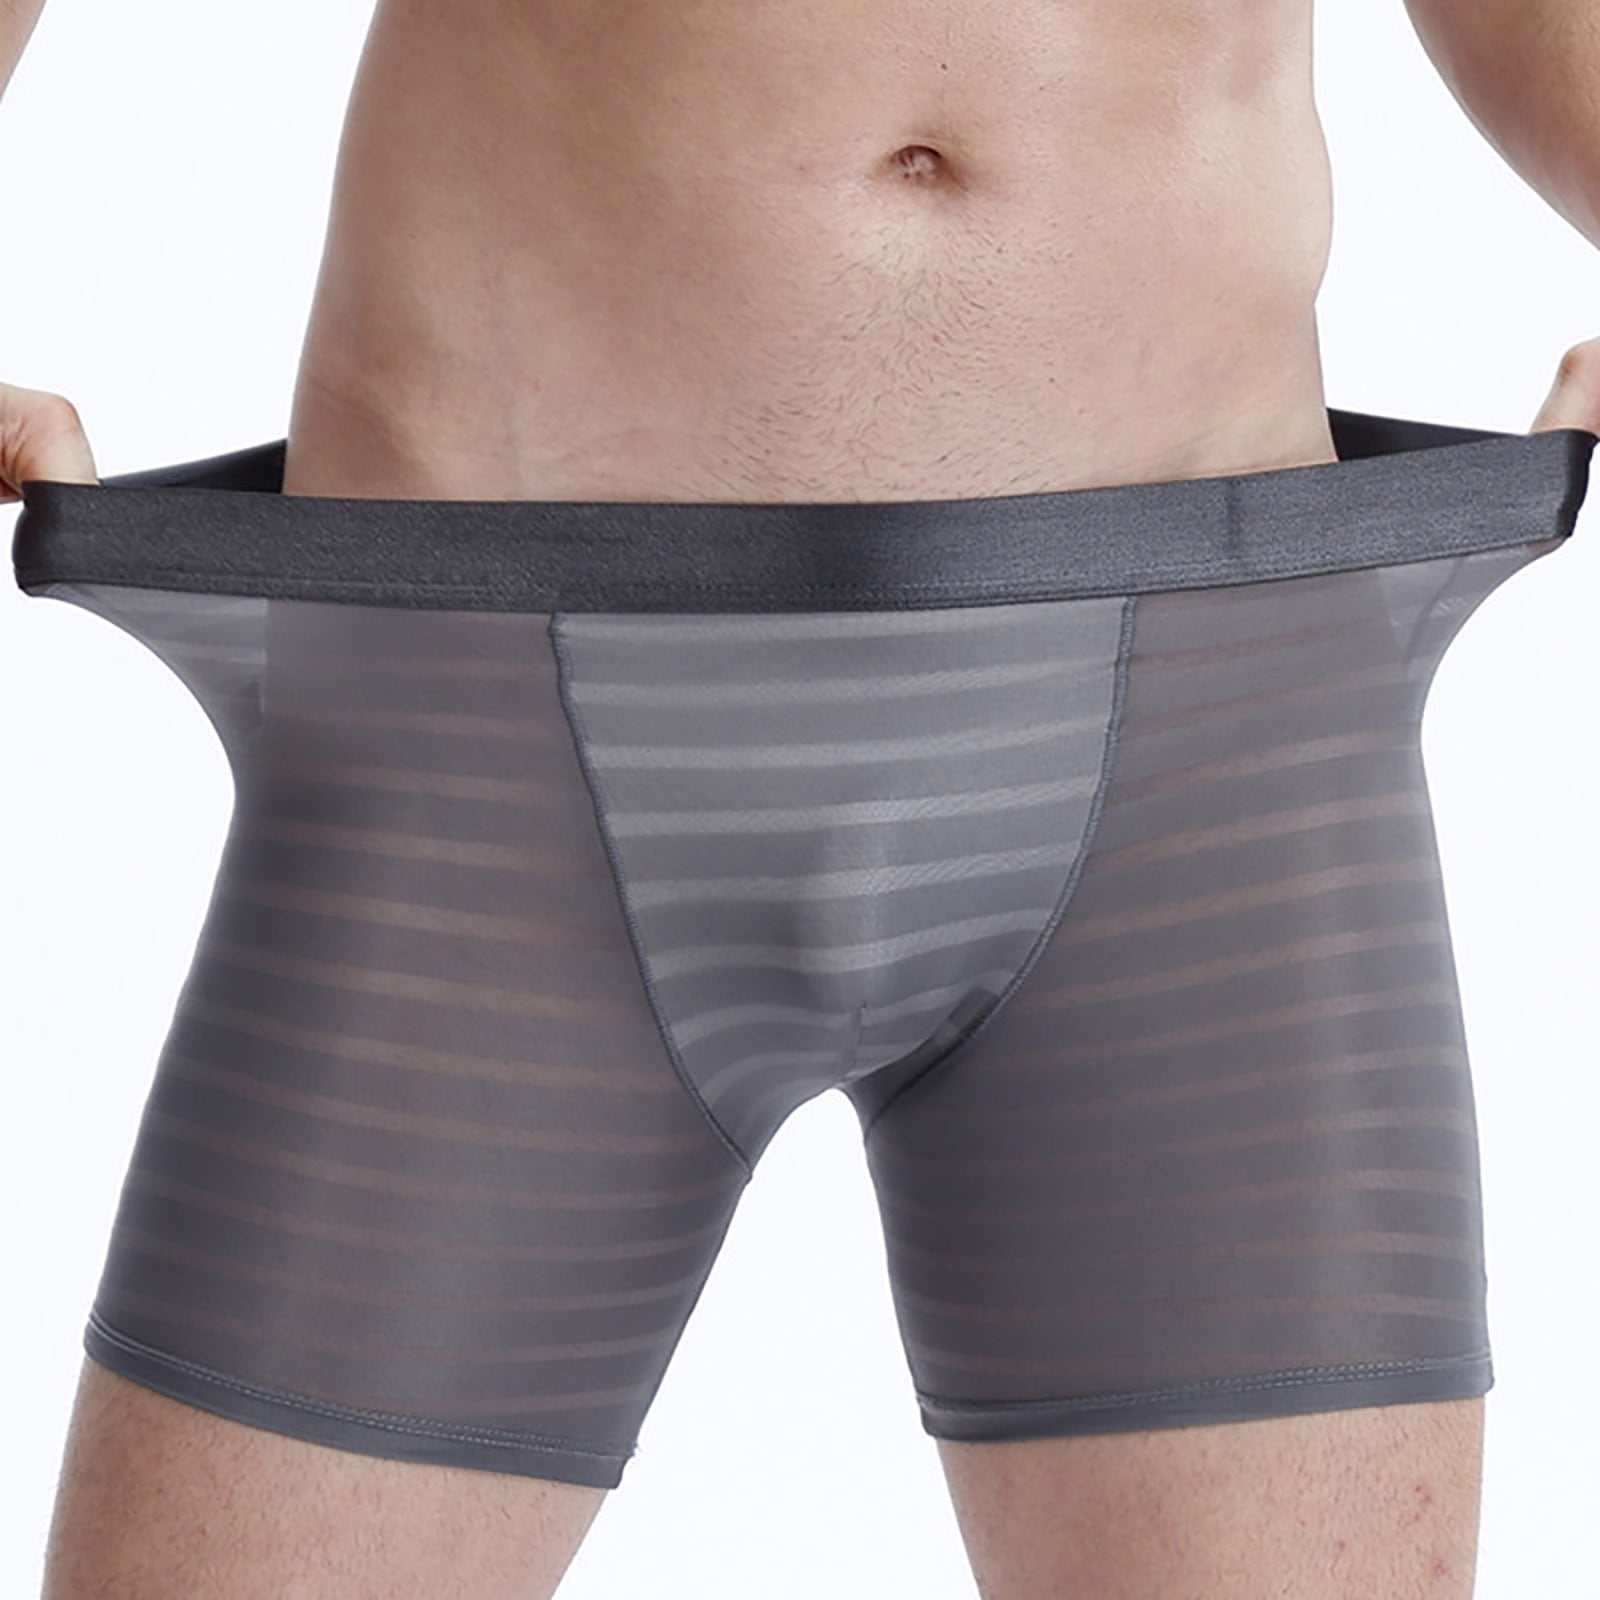 TIHLMKi Men's Underwear Deals Clearance Under $10 Men's long, , breathable  and wear resistant boxer underwear